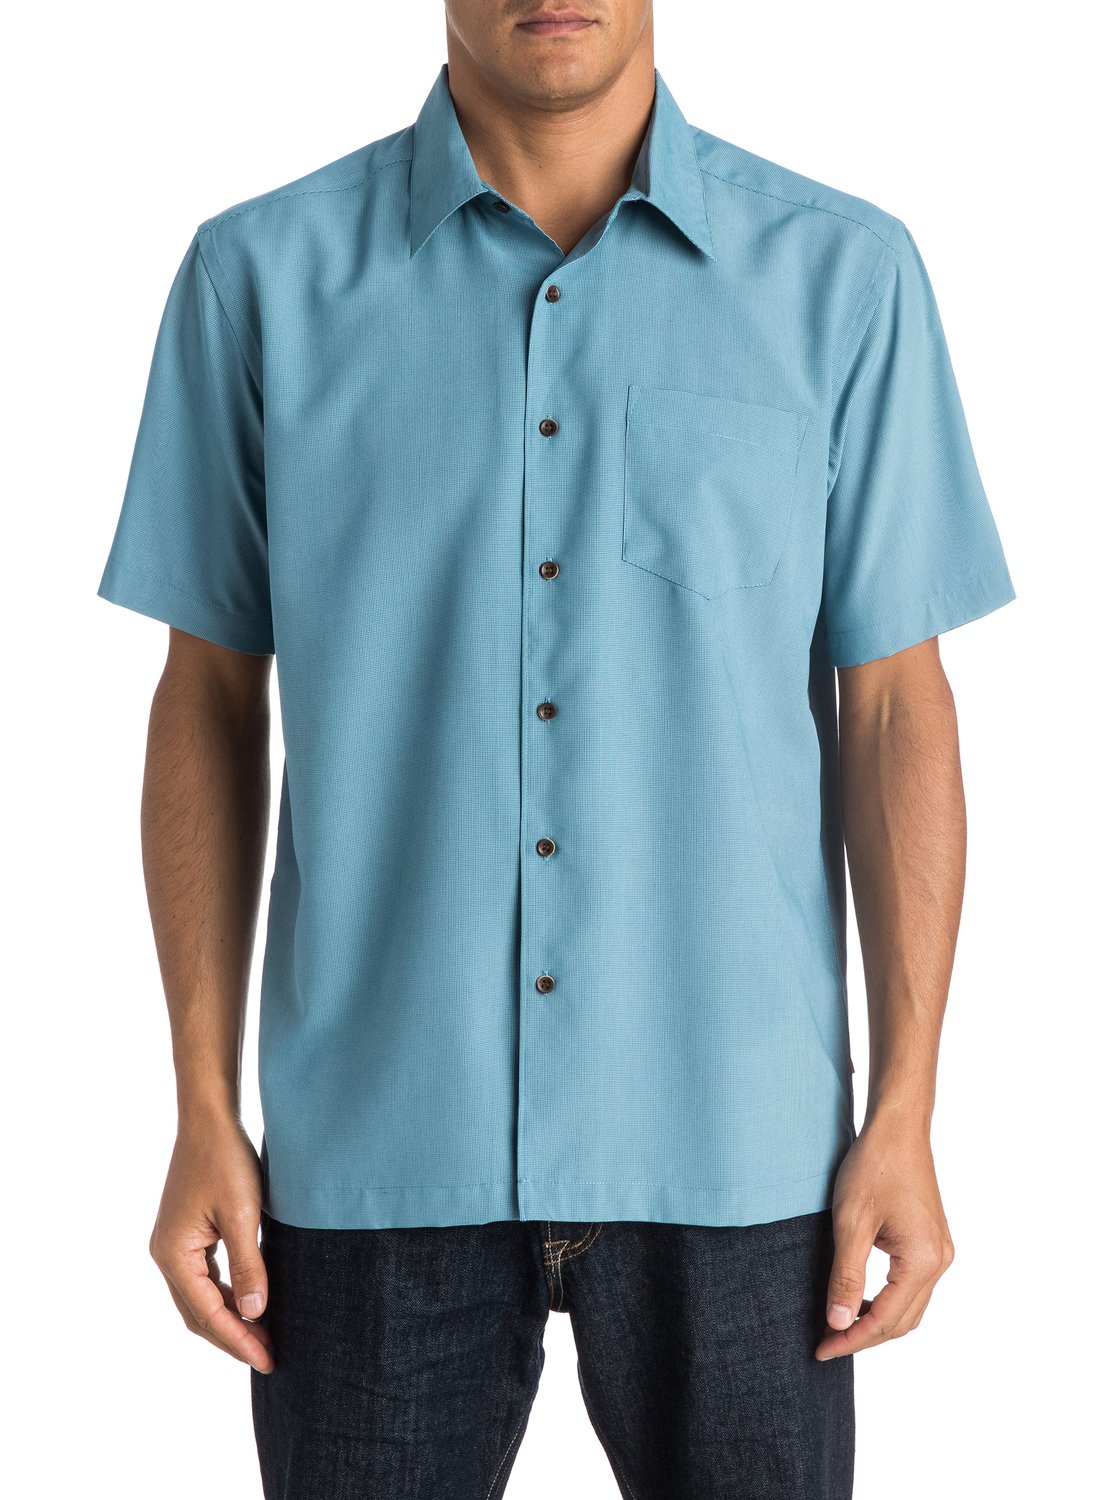 Quiksilver™ Waterman Cane Island Short Sleeve Shirt AQMWT03113 | eBay